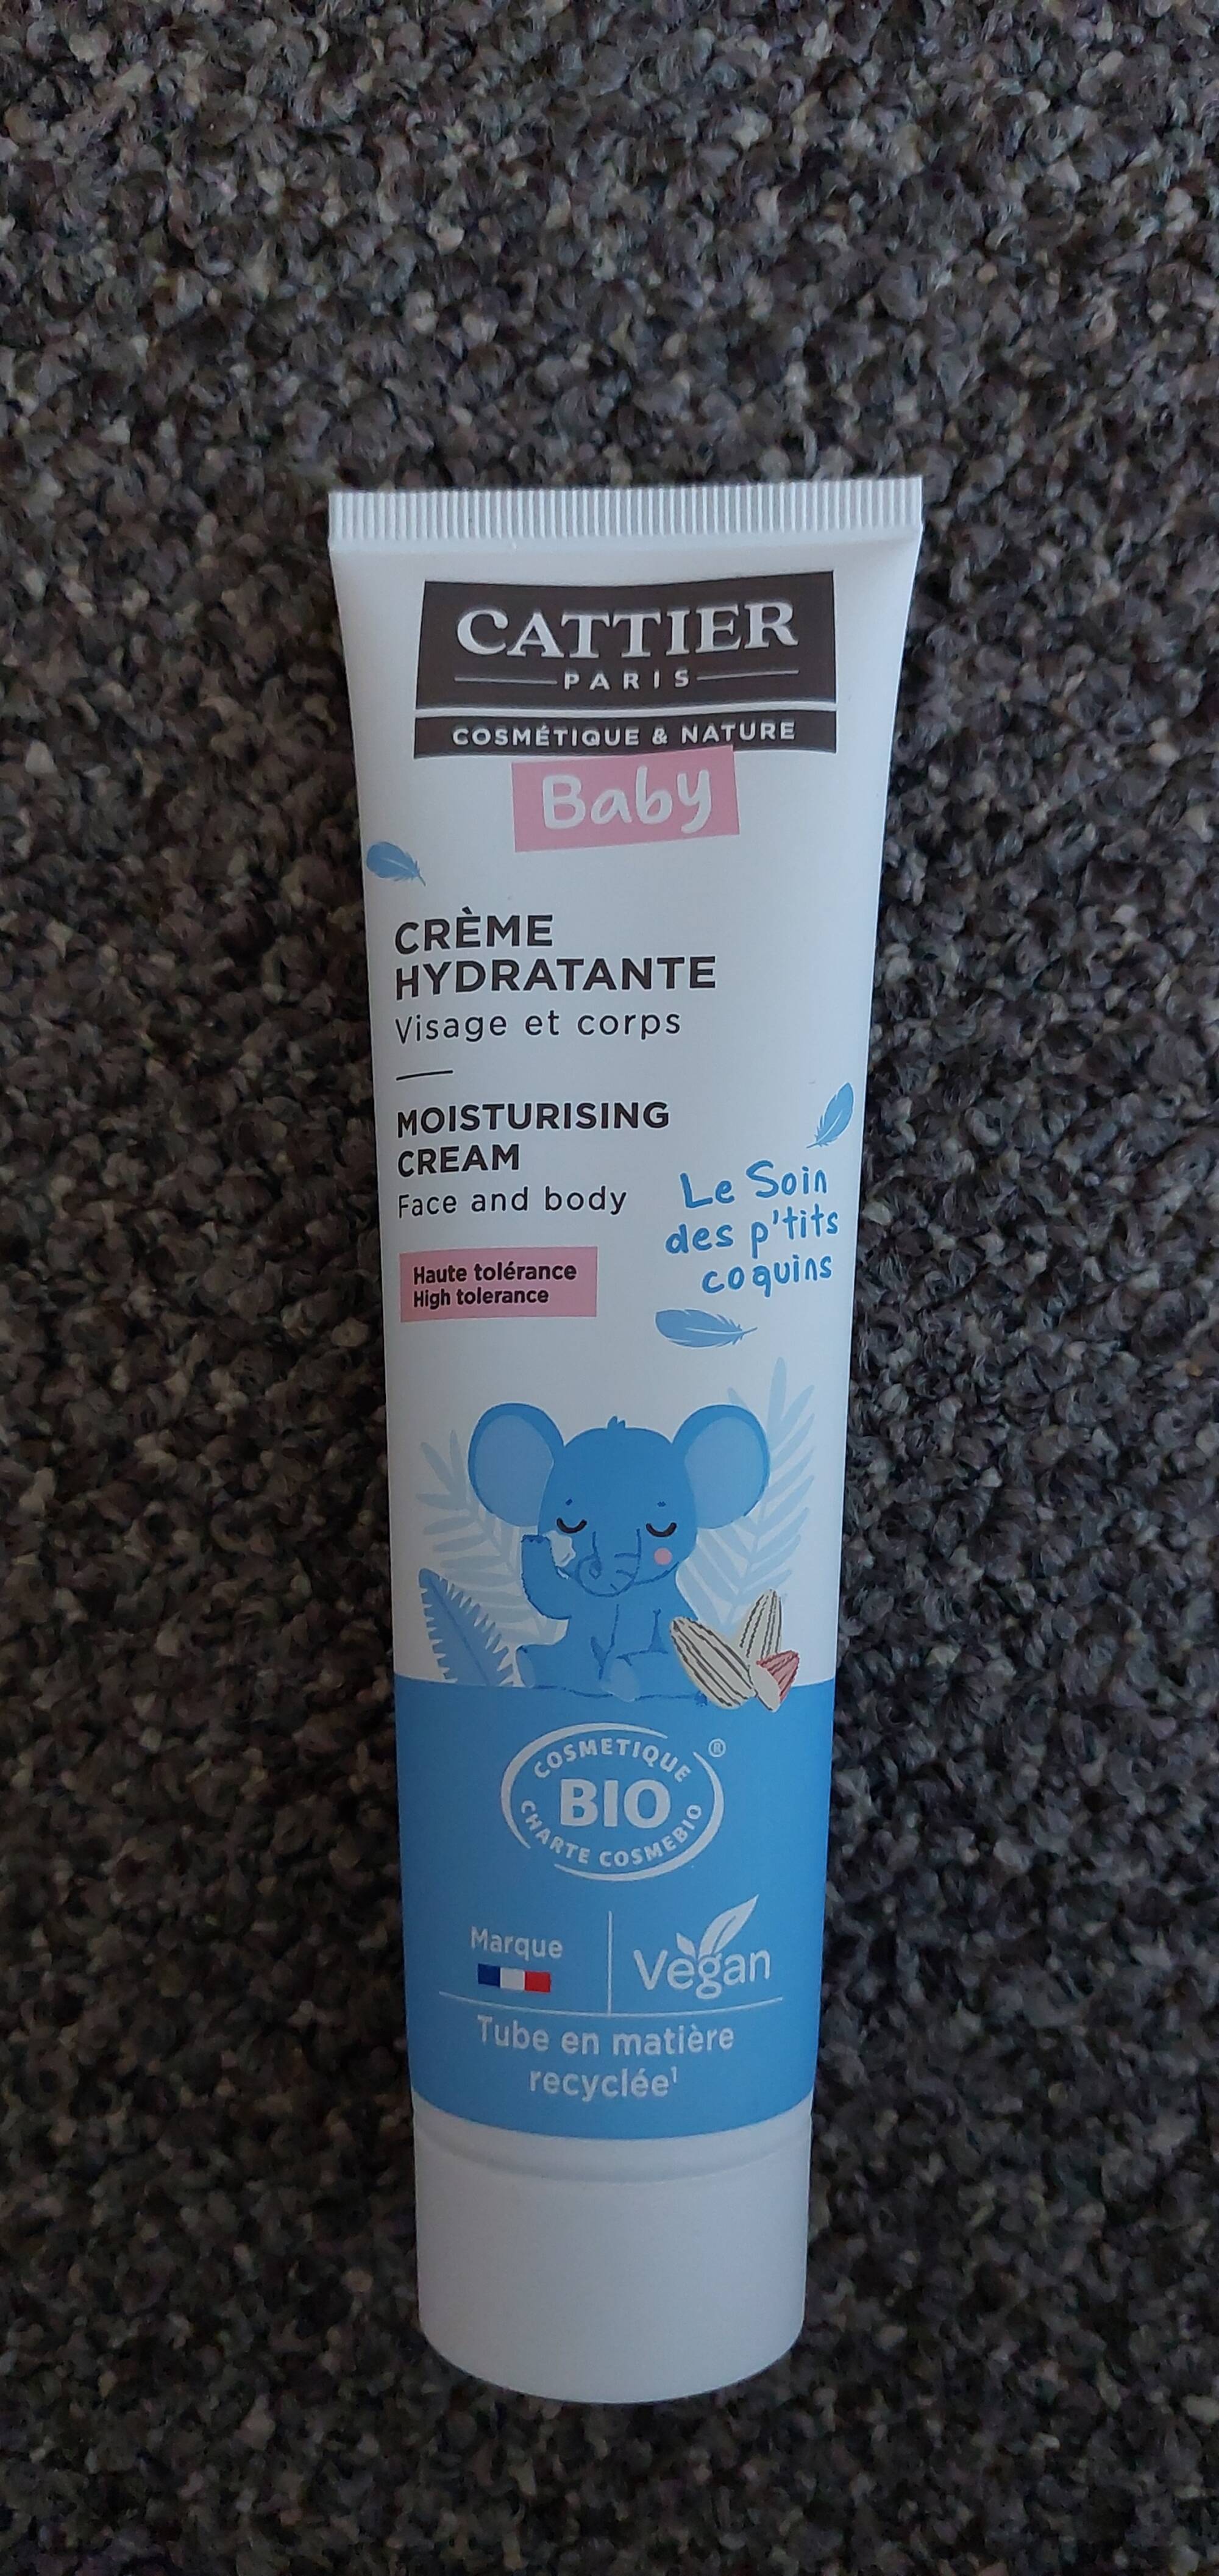 CATTIER - Baby - Crème hydratante